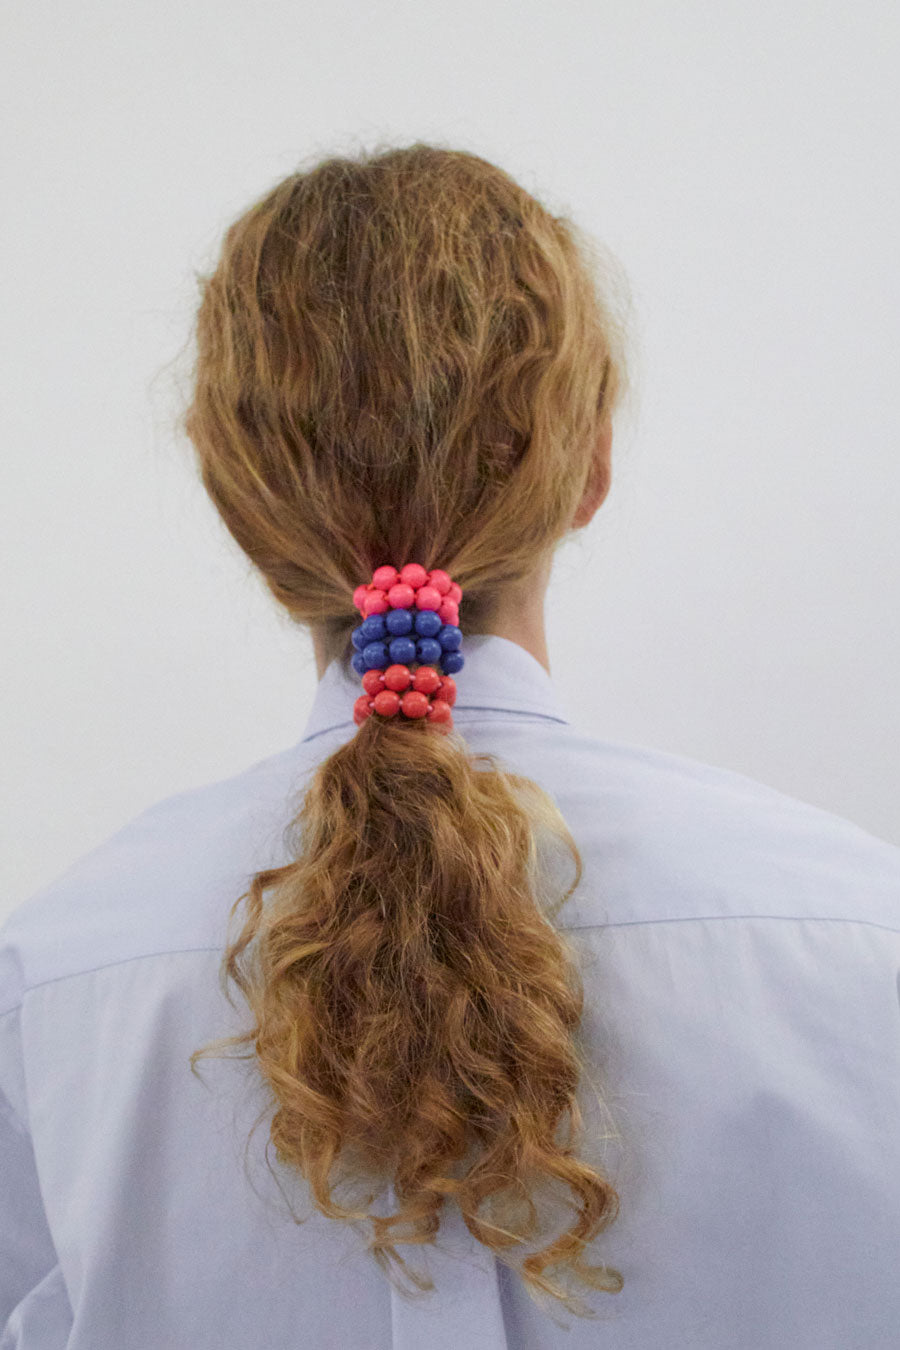 Ina Seifart Haargummi Hair Ties Set of 3 in Blue and Pink Mix